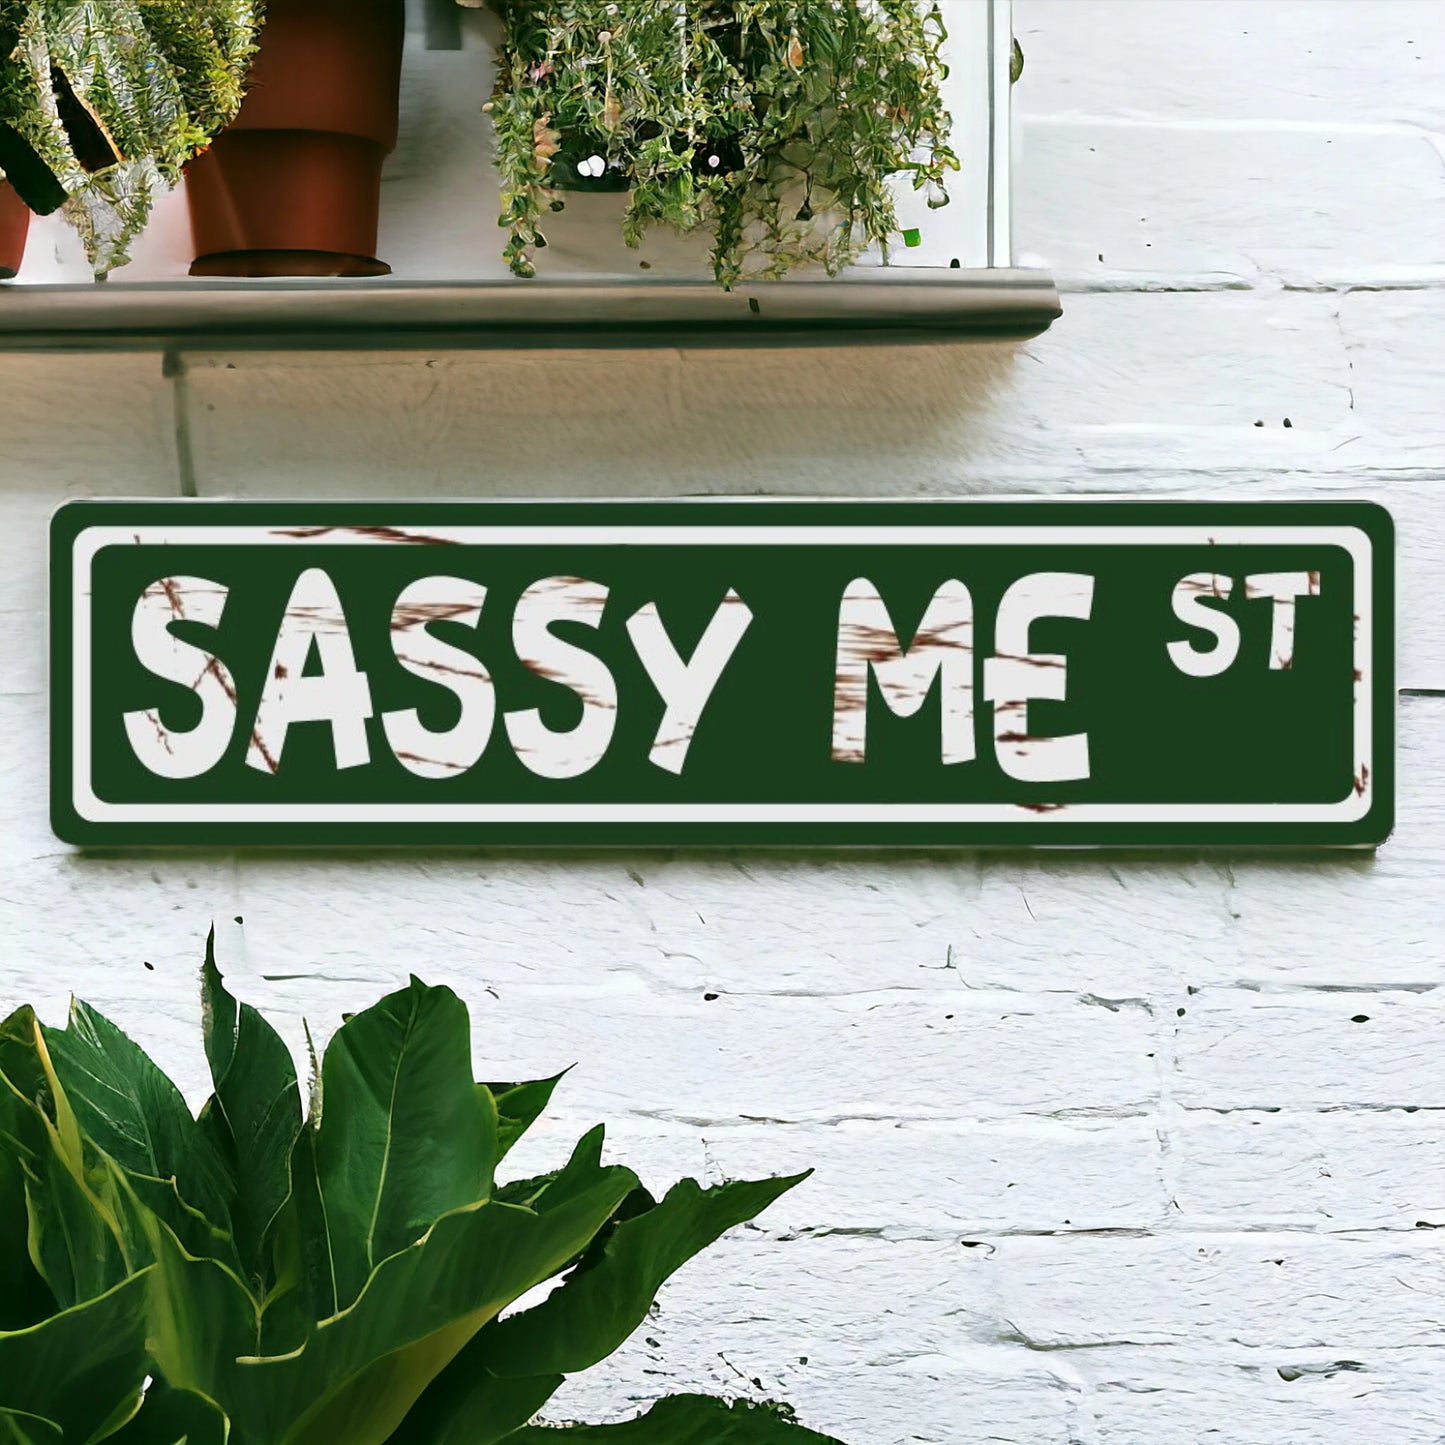 Sassy Me Street Sign